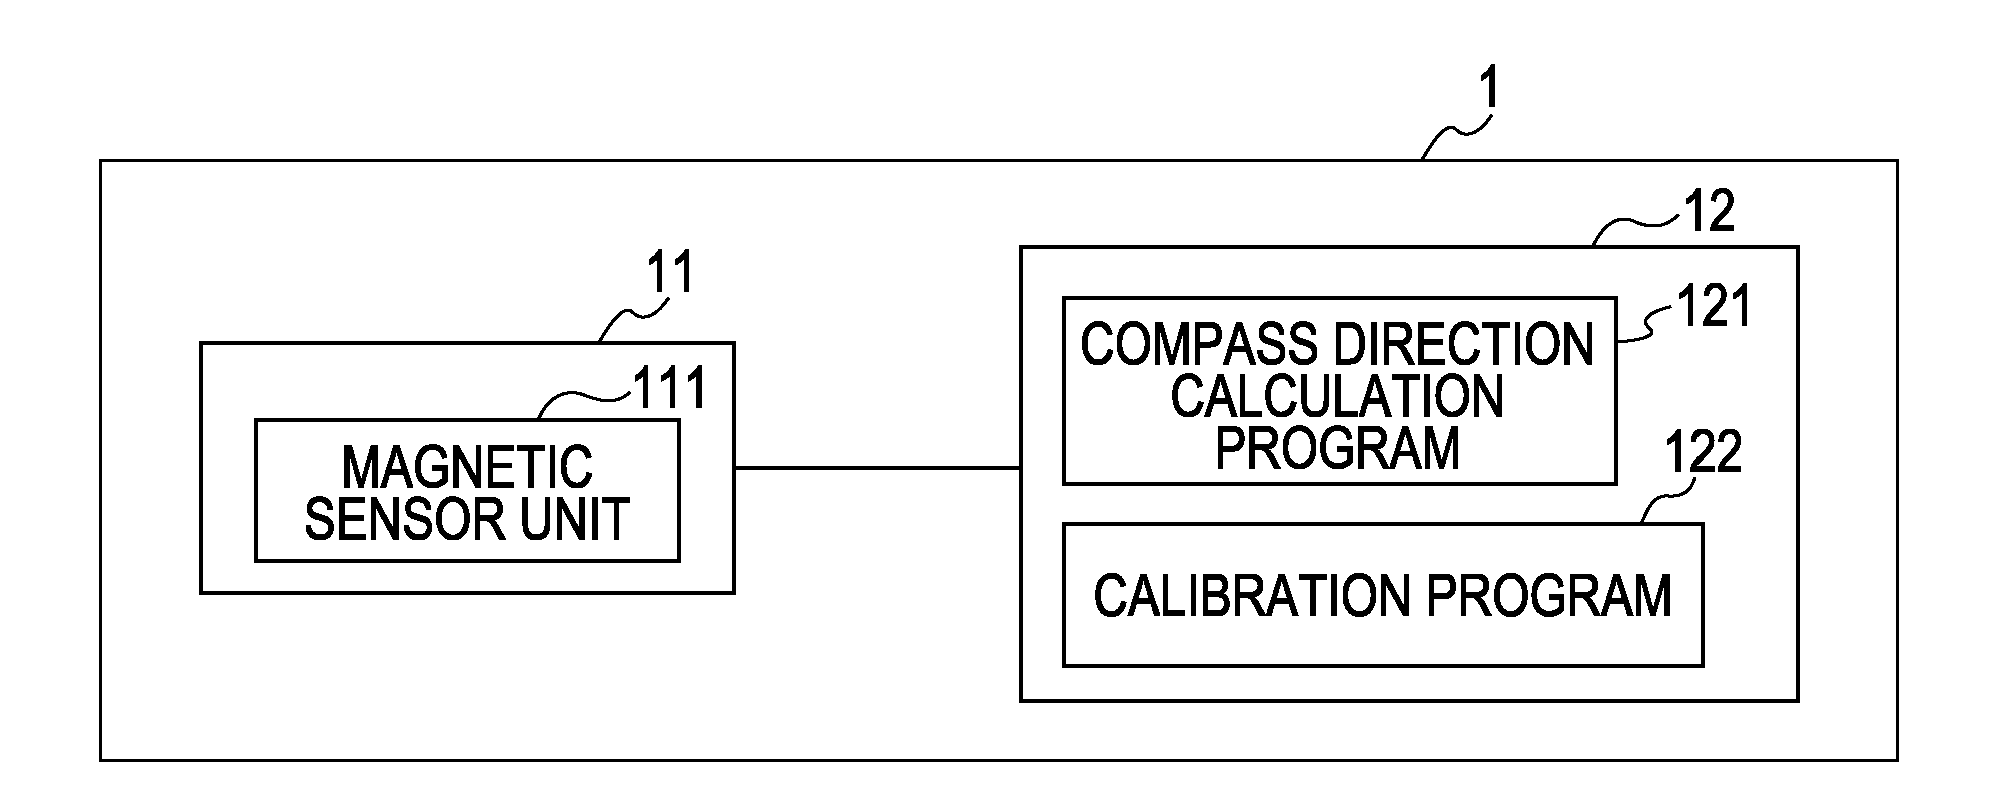 Calibration program and electronic compass